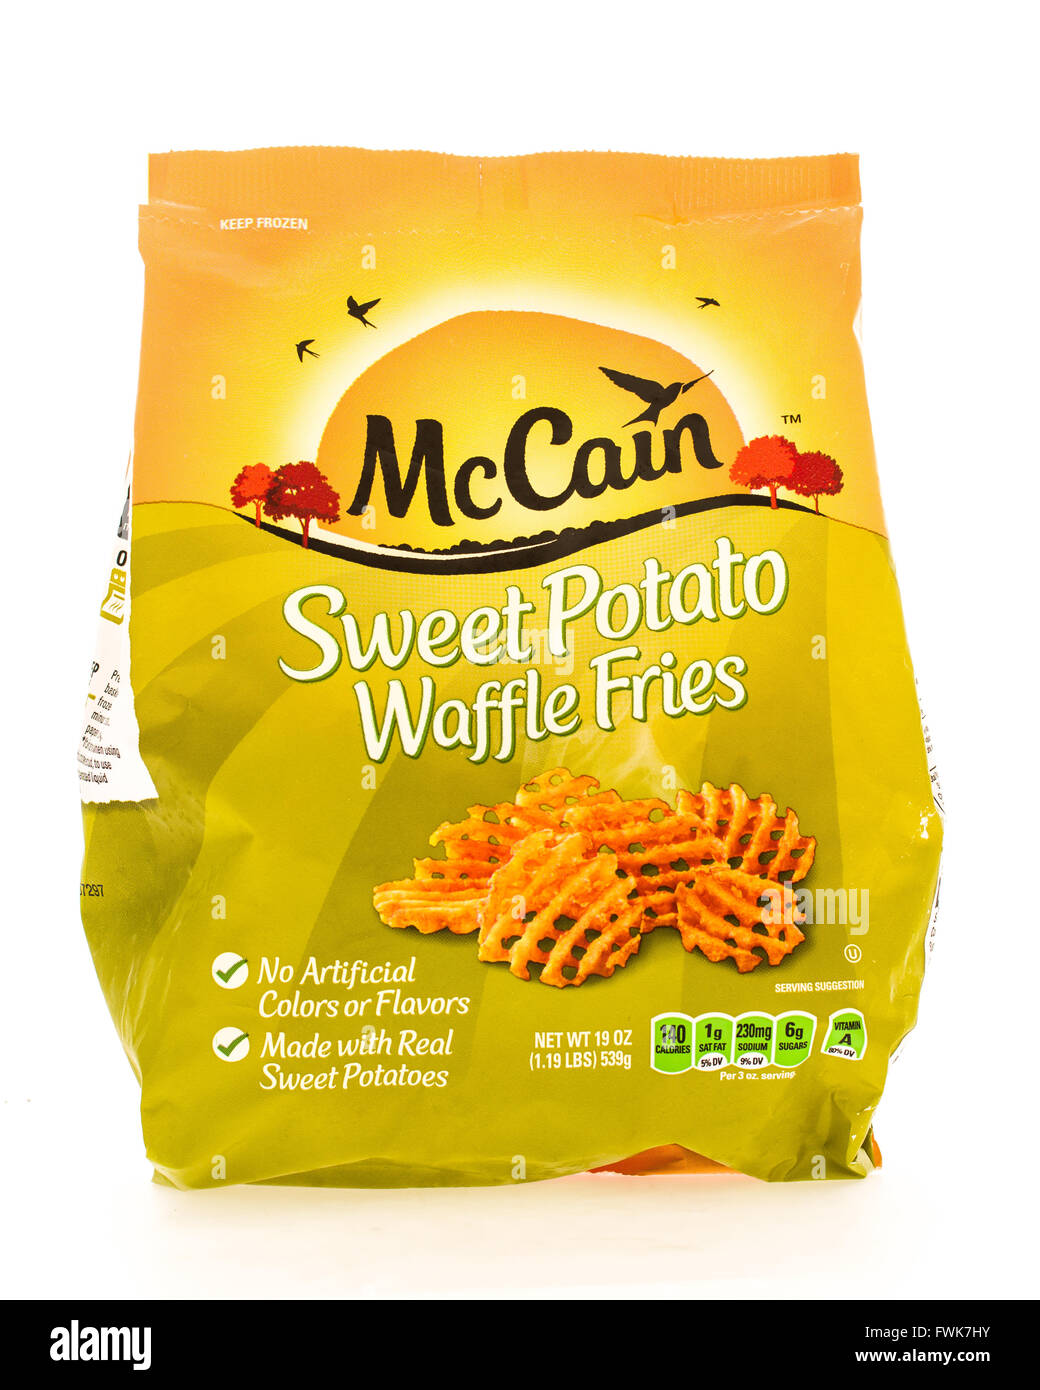 https://c8.alamy.com/comp/FWK7HY/winneconne-wi-18-august-2015-bag-of-mccain-sweet-potato-waffle-fries-FWK7HY.jpg